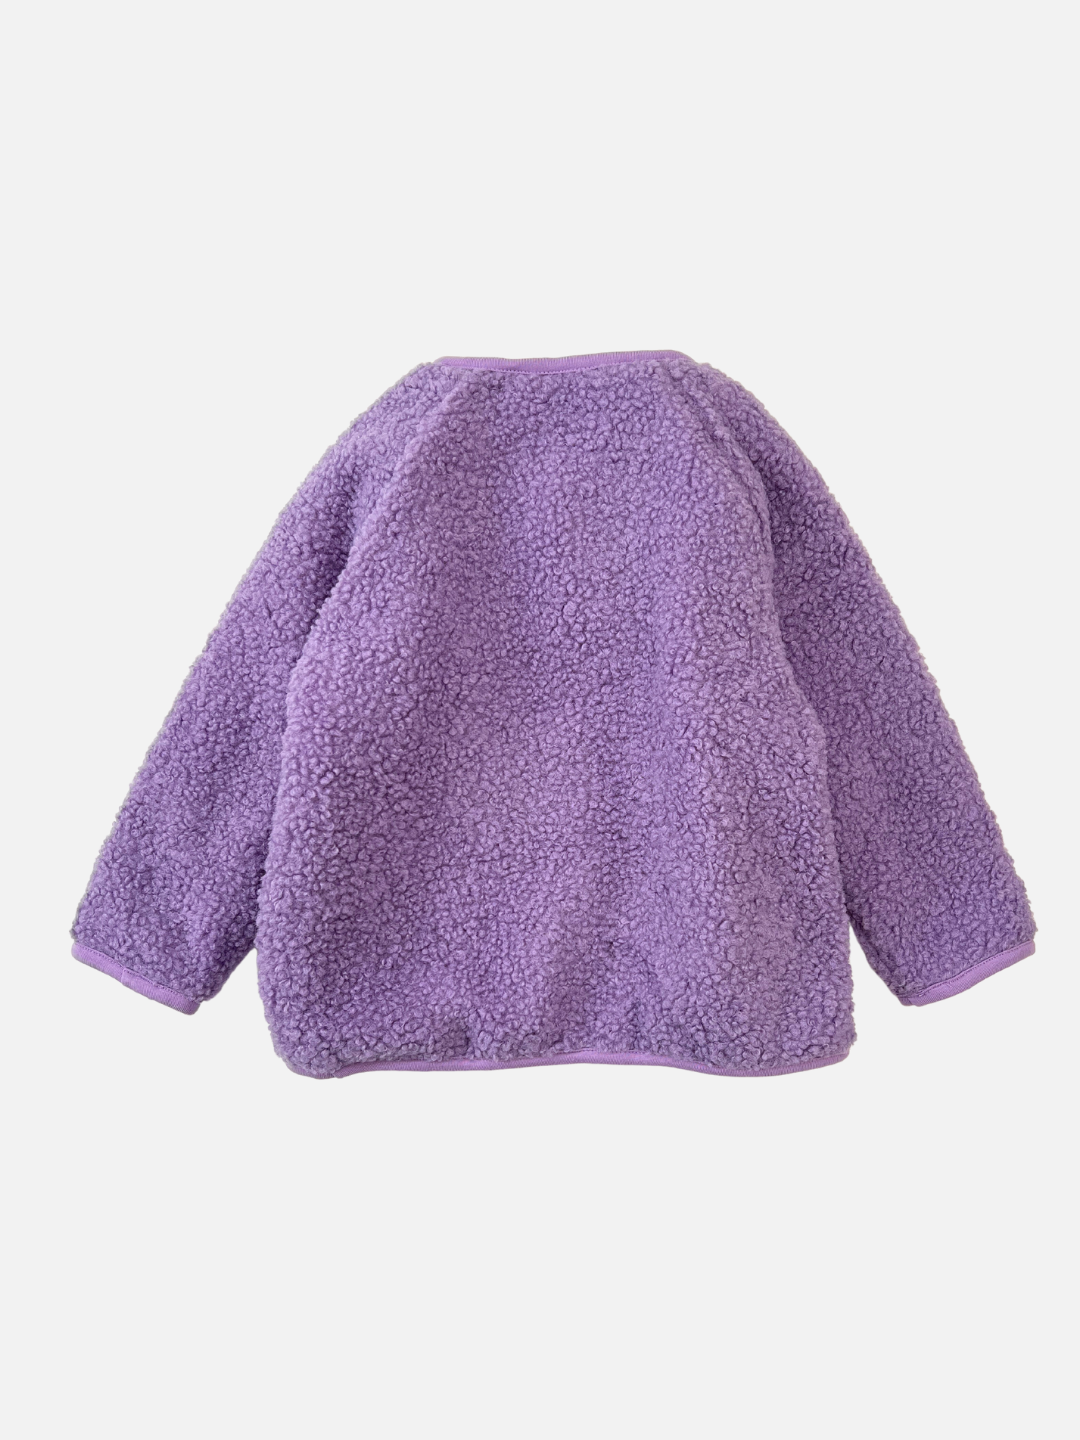 Back view of a kids purple collarless fleece jacket.